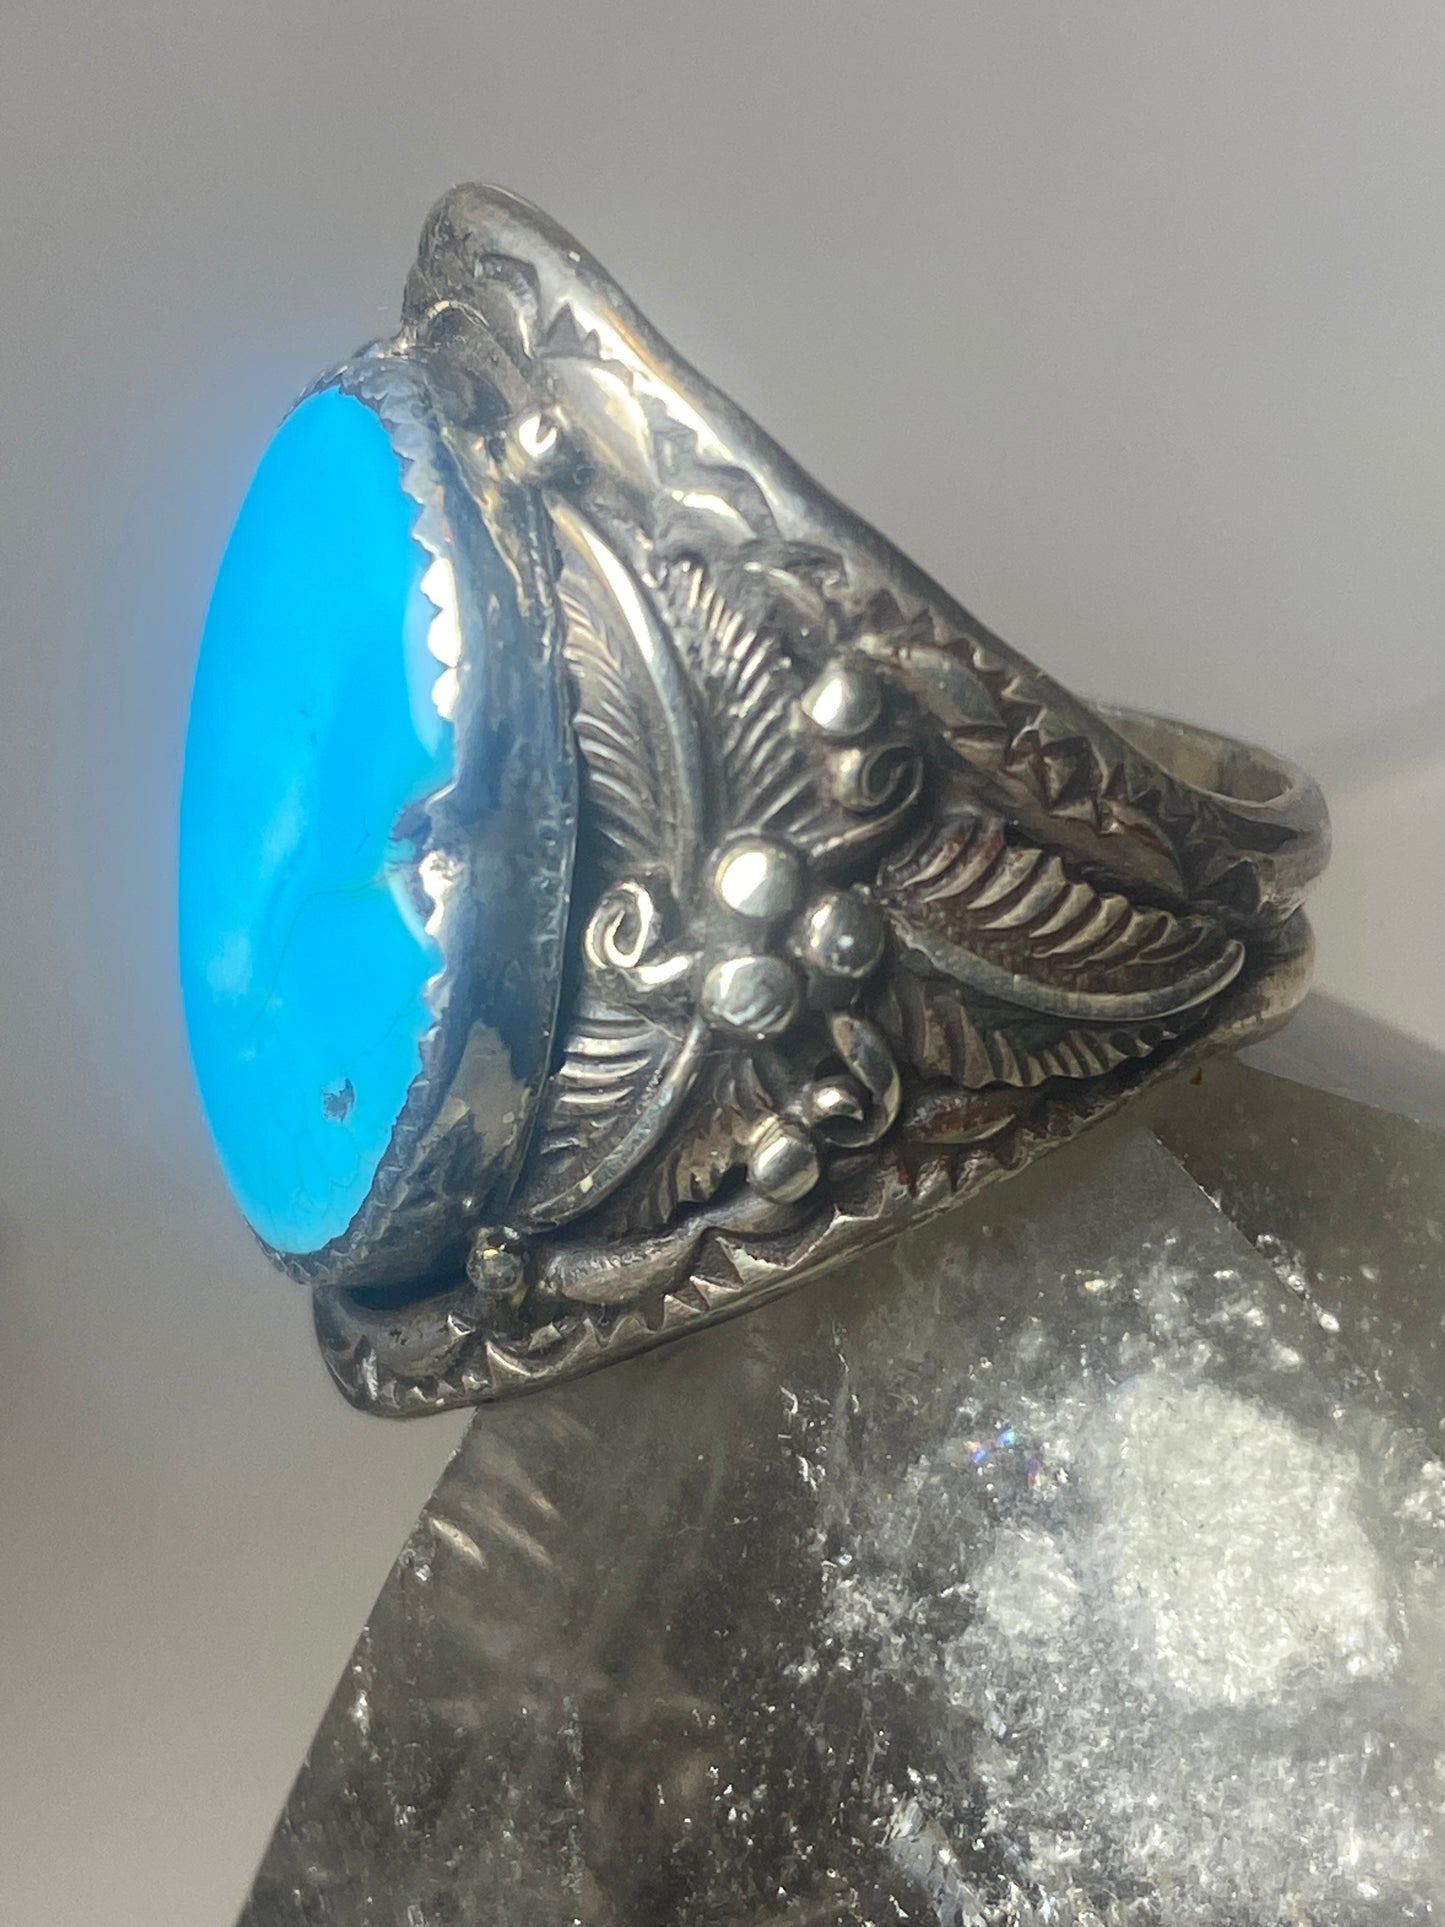 Turquoise ring size 11.25 Navajo southwest sterling silver women men